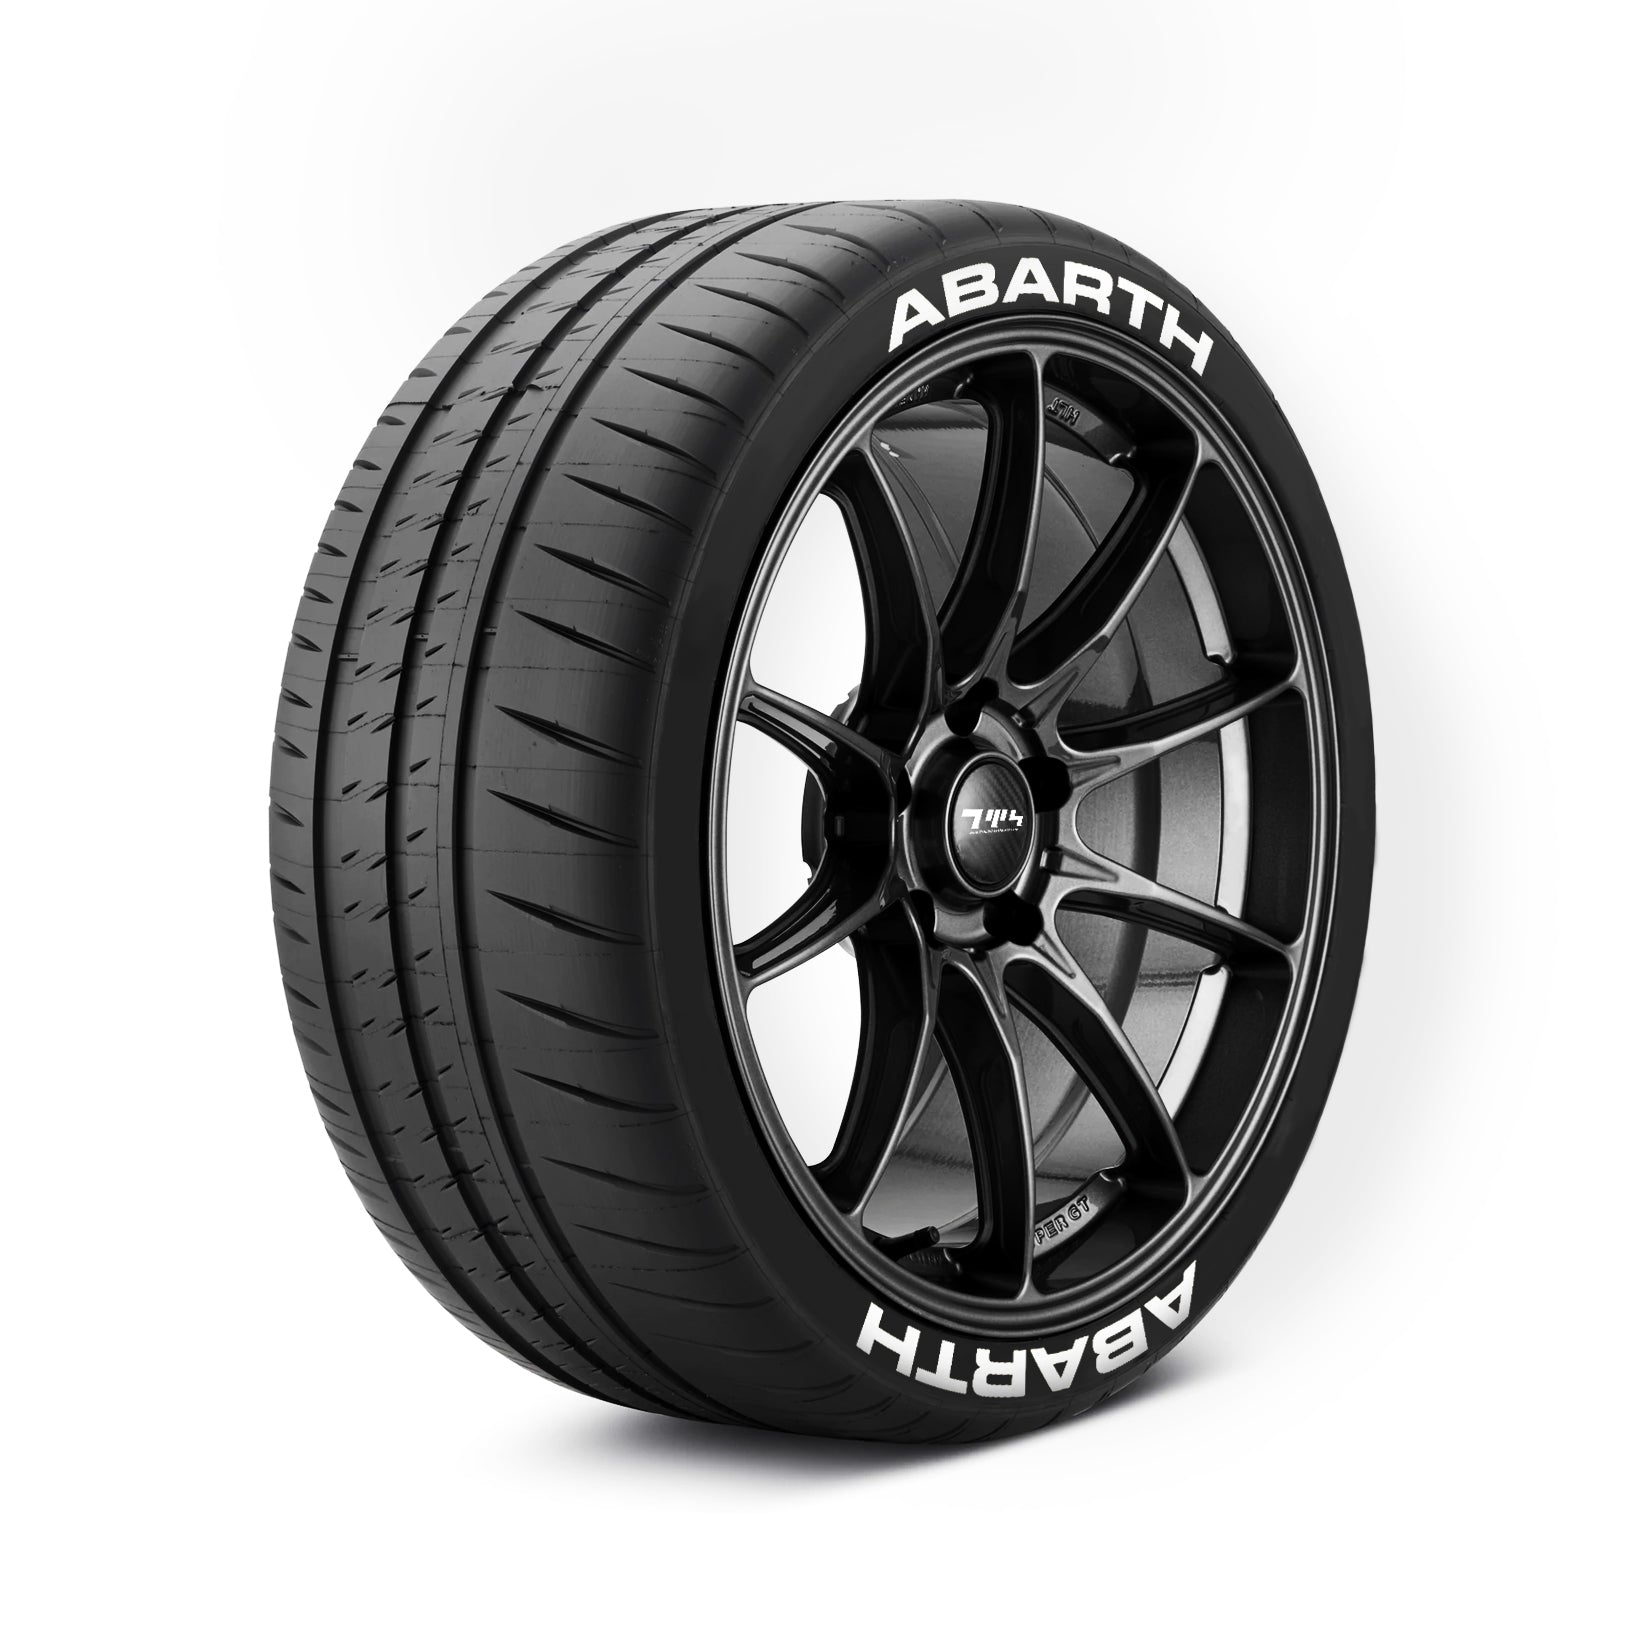 Abarth-Reifenaufkleber